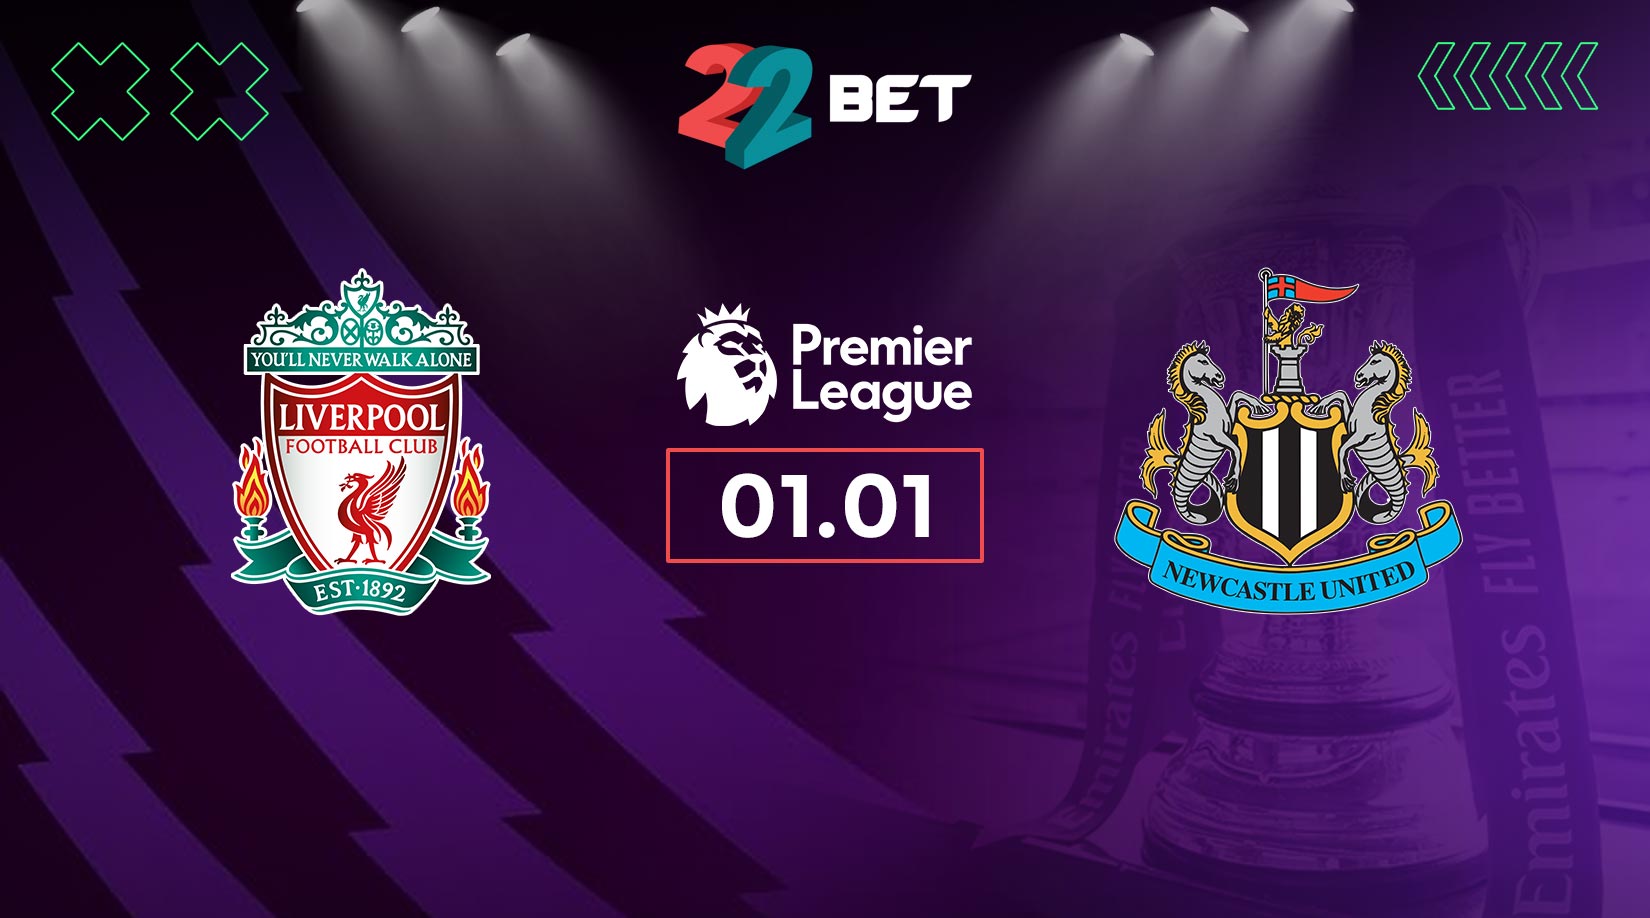 Liverpool vs Newcastle Utd Prediction: Premier League Match